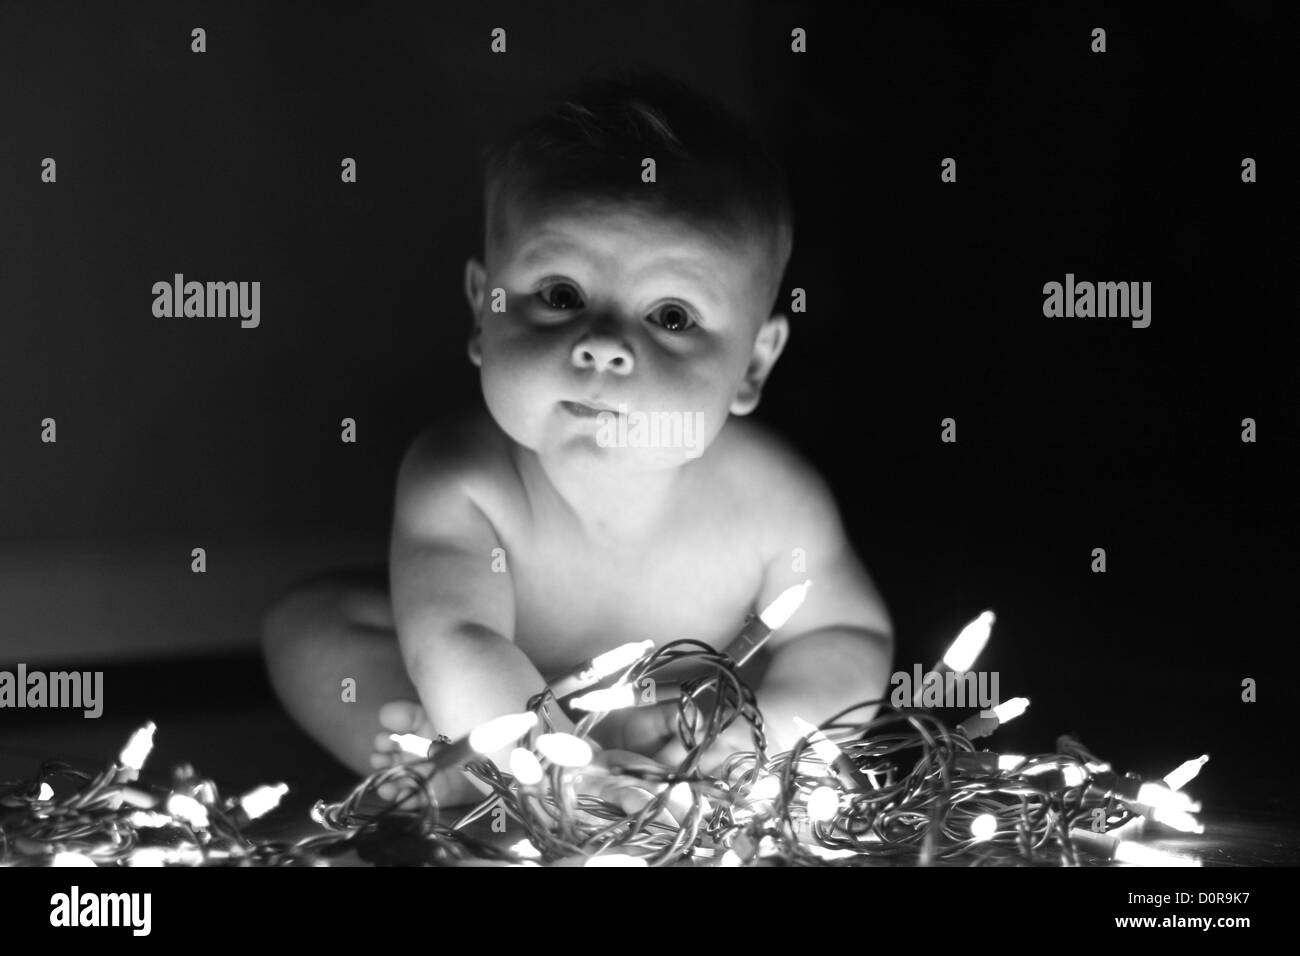 Baby playing with Christmas lights Stock Photo